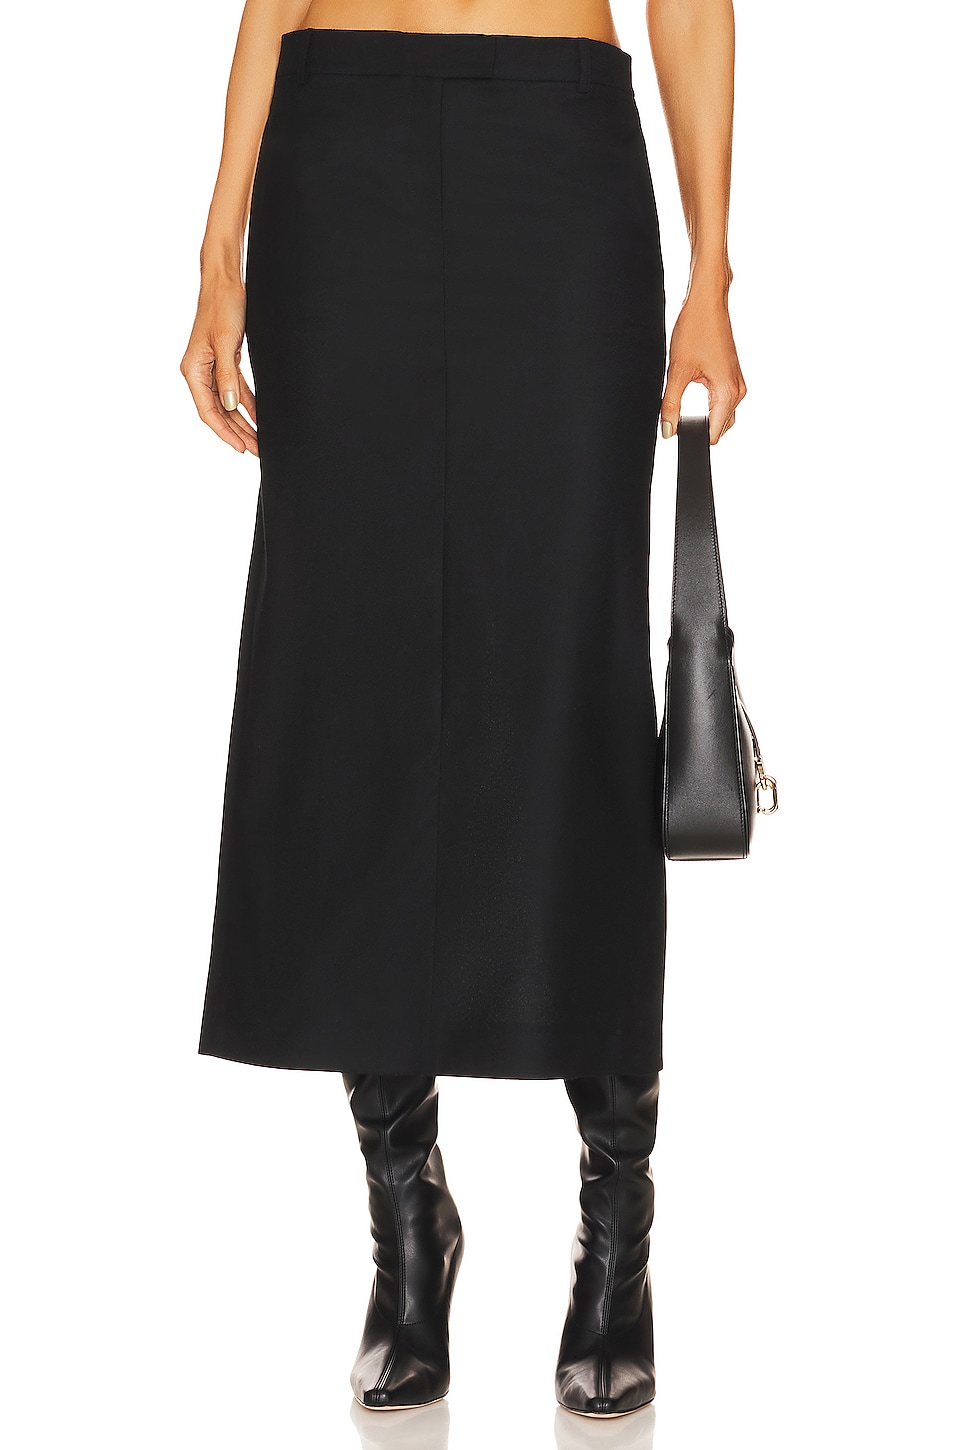 Aya Muse Ardens Skirt in Black | REVOLVE